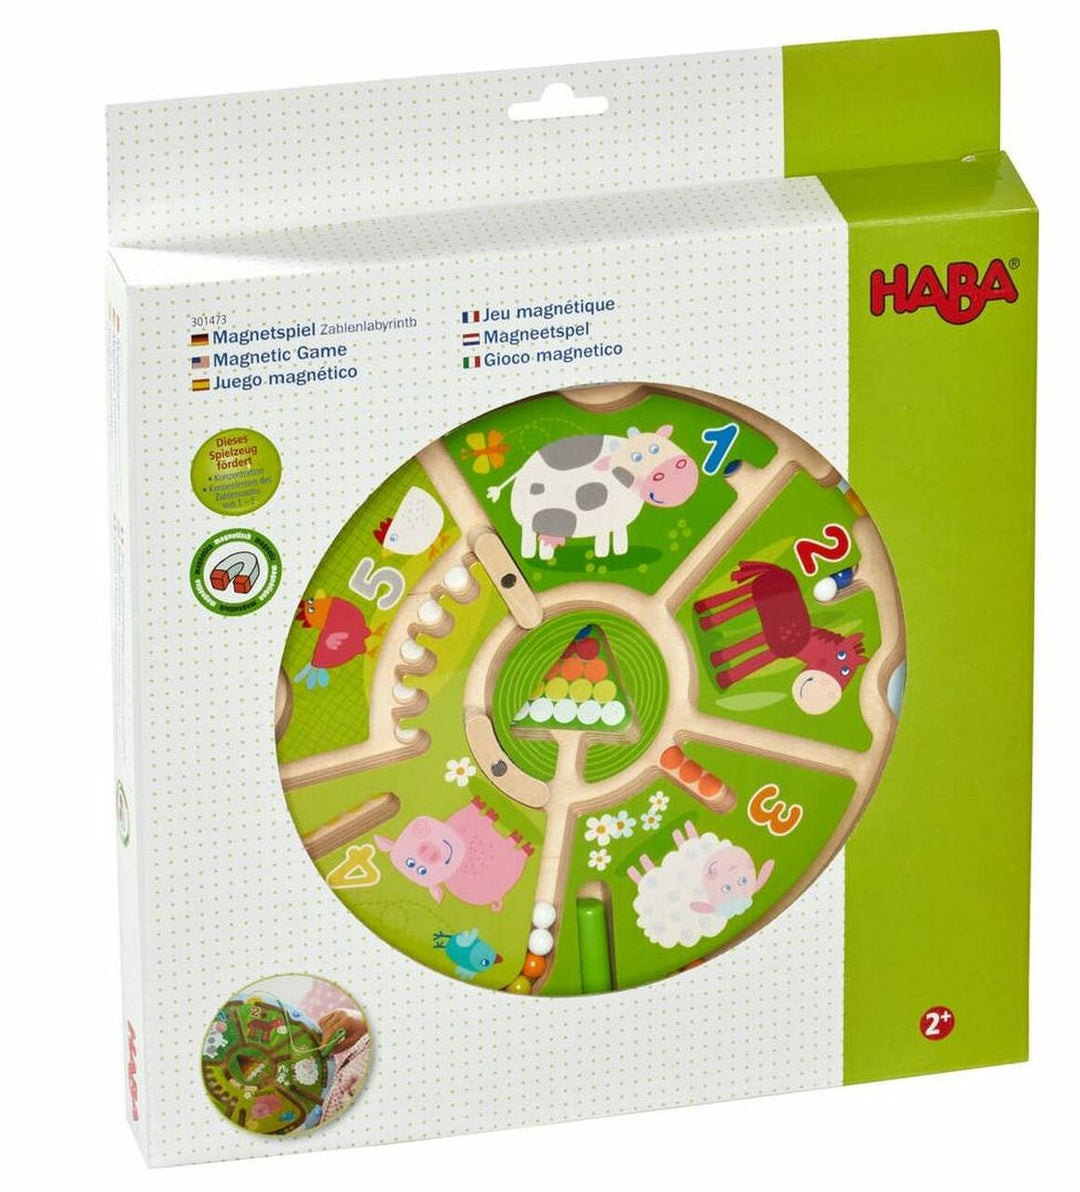 HABA Magnetic Game Numbermaze